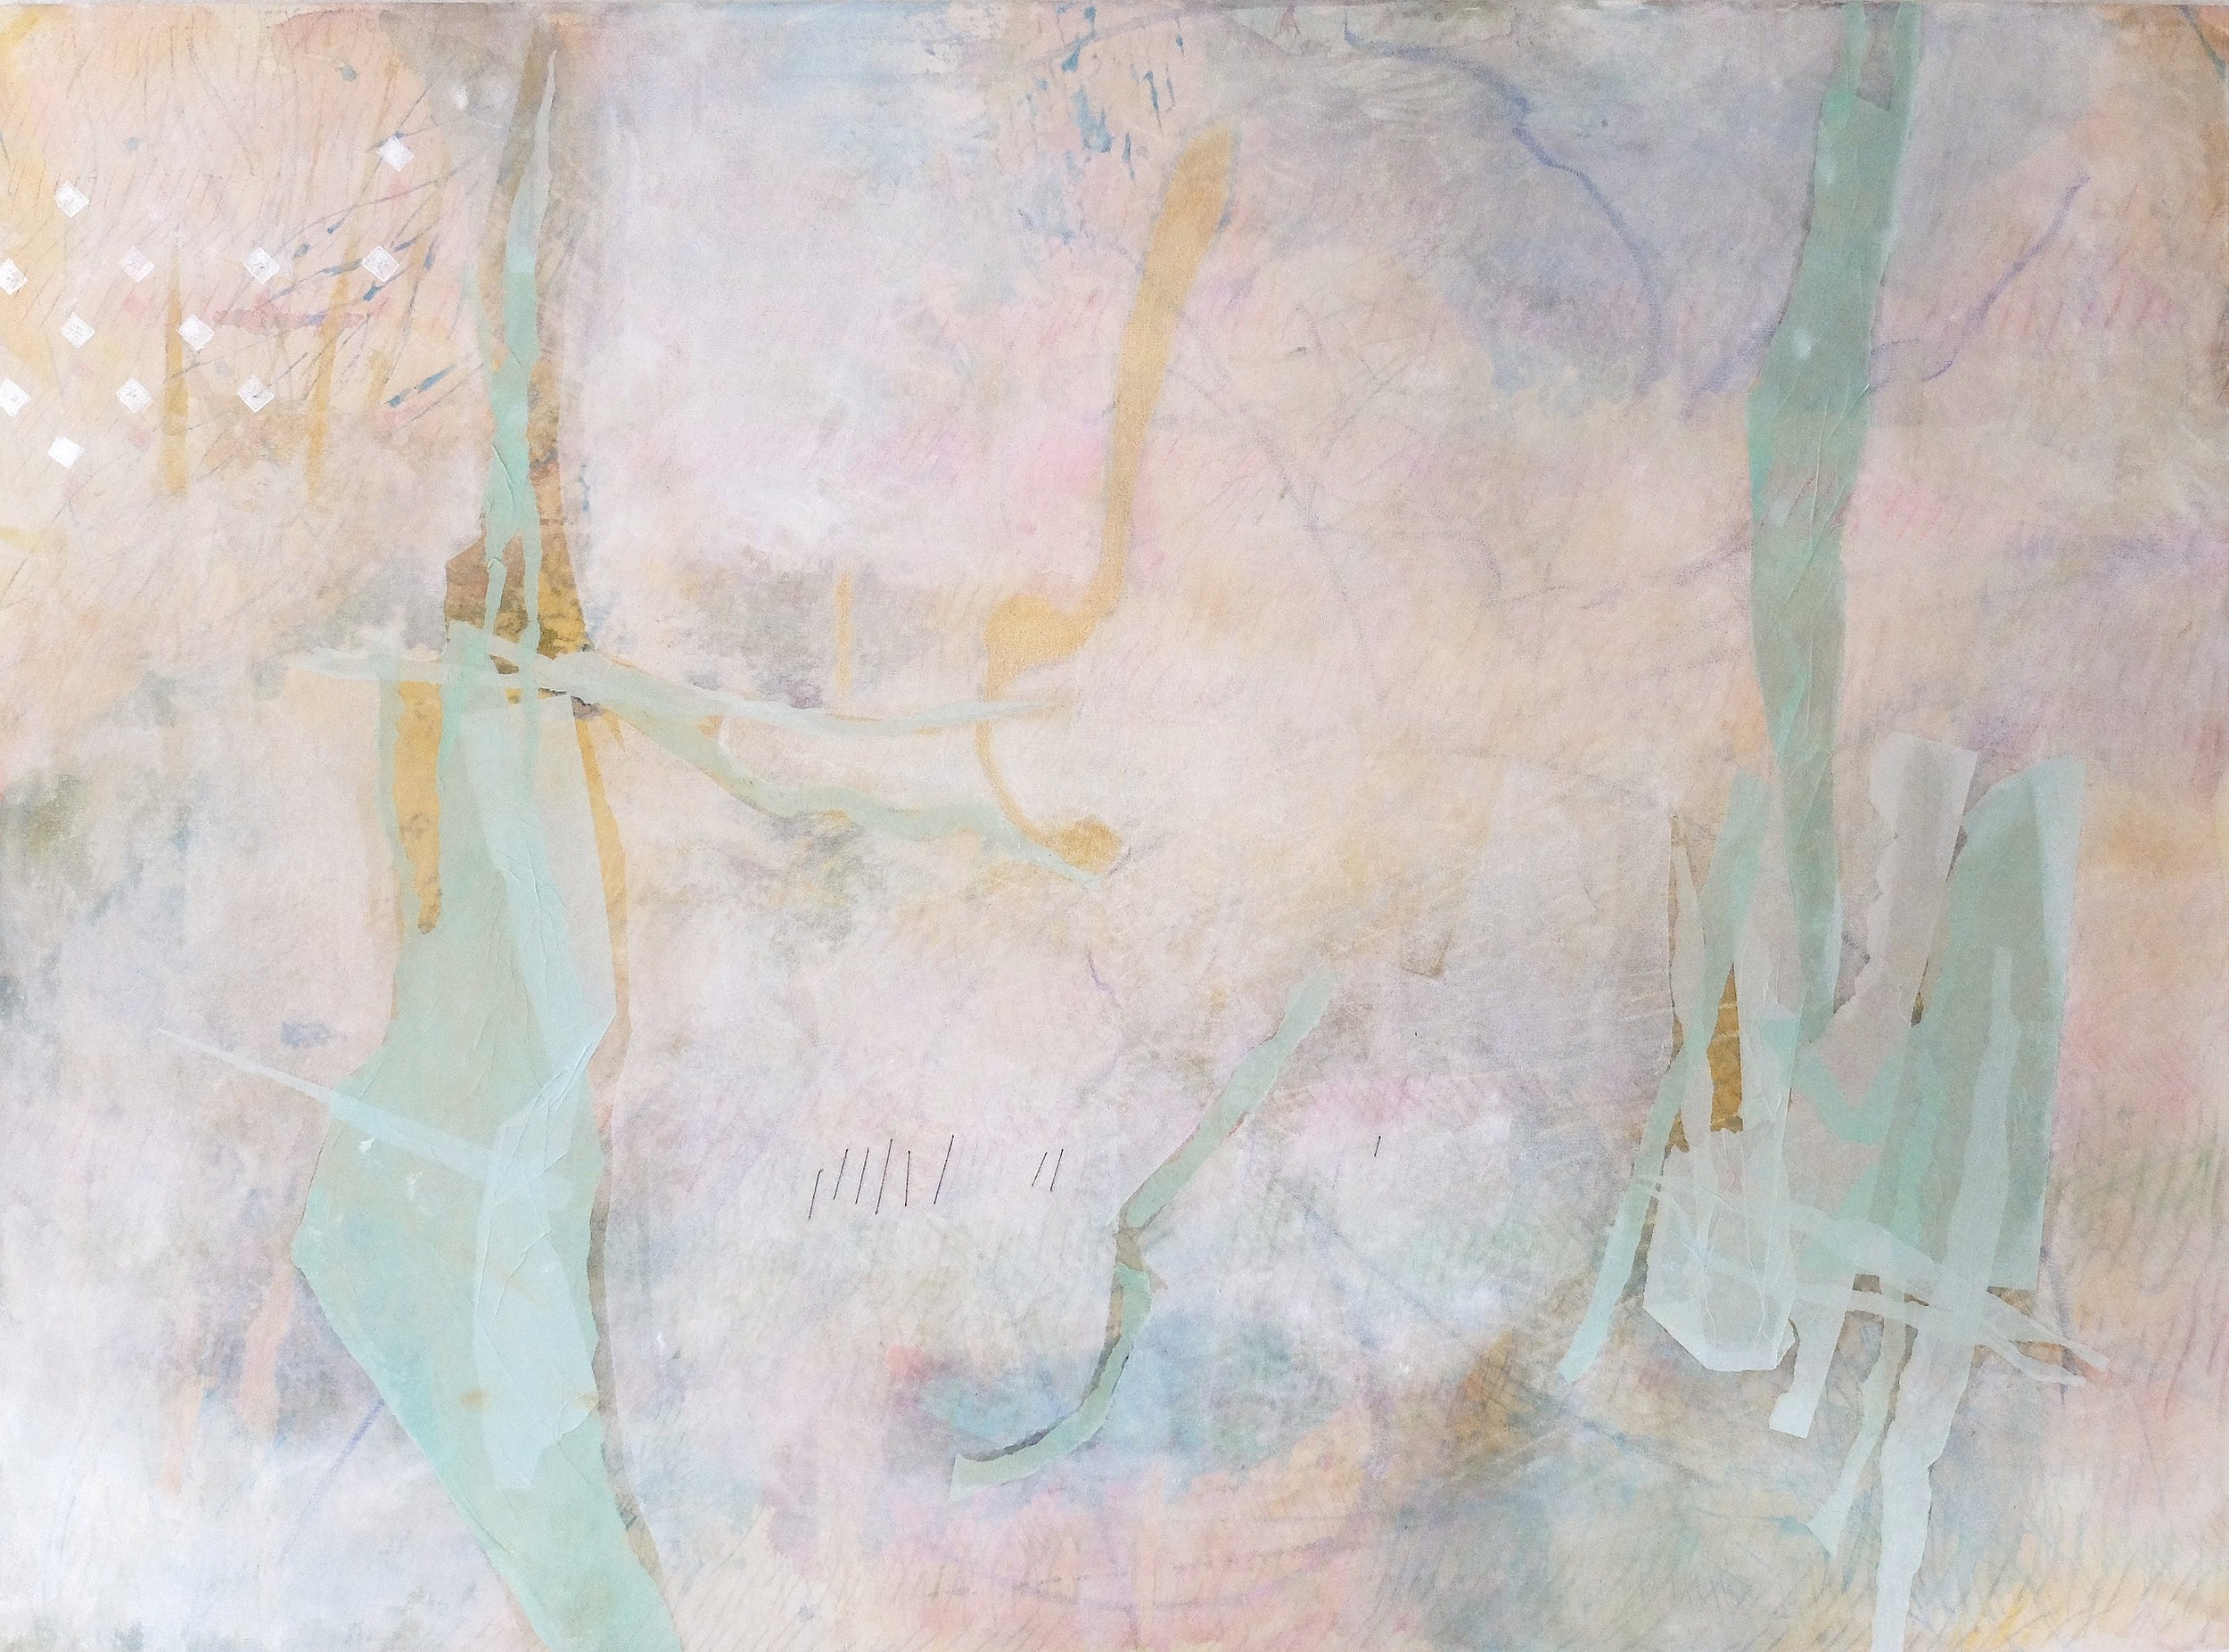 No. 6, 2015, acrylic, oil pastel, soft pastel, coloured pencil, paper collage, thread on canvas, 94 x 132 cm (37 x 52 in), Zurich, Switzerland